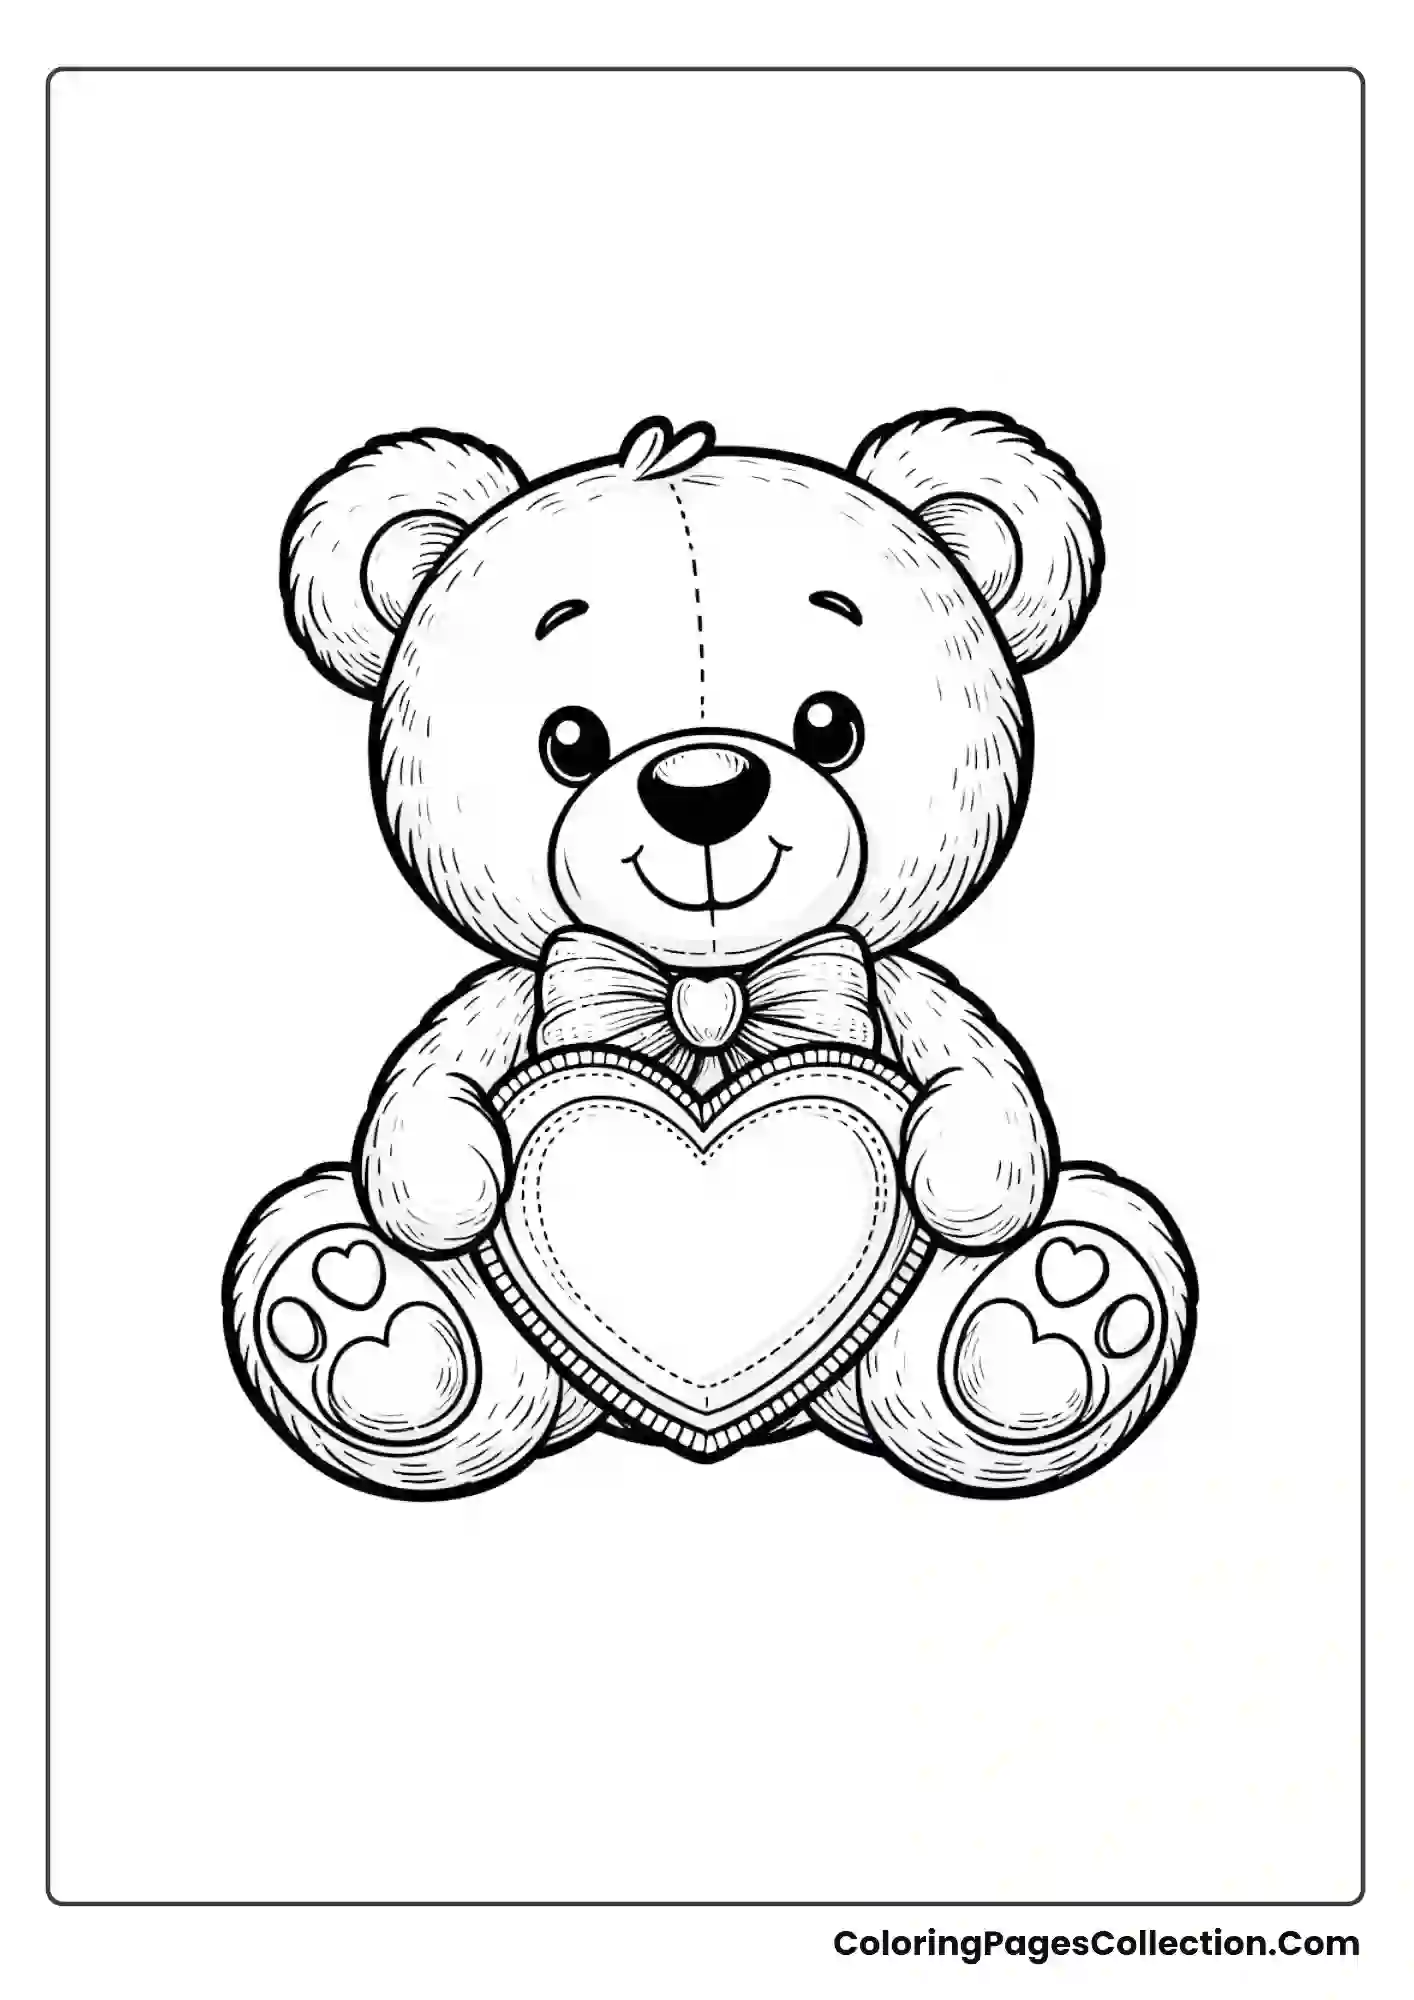 A Heart-shaped Teddy Bear Holding A Smaller Heart